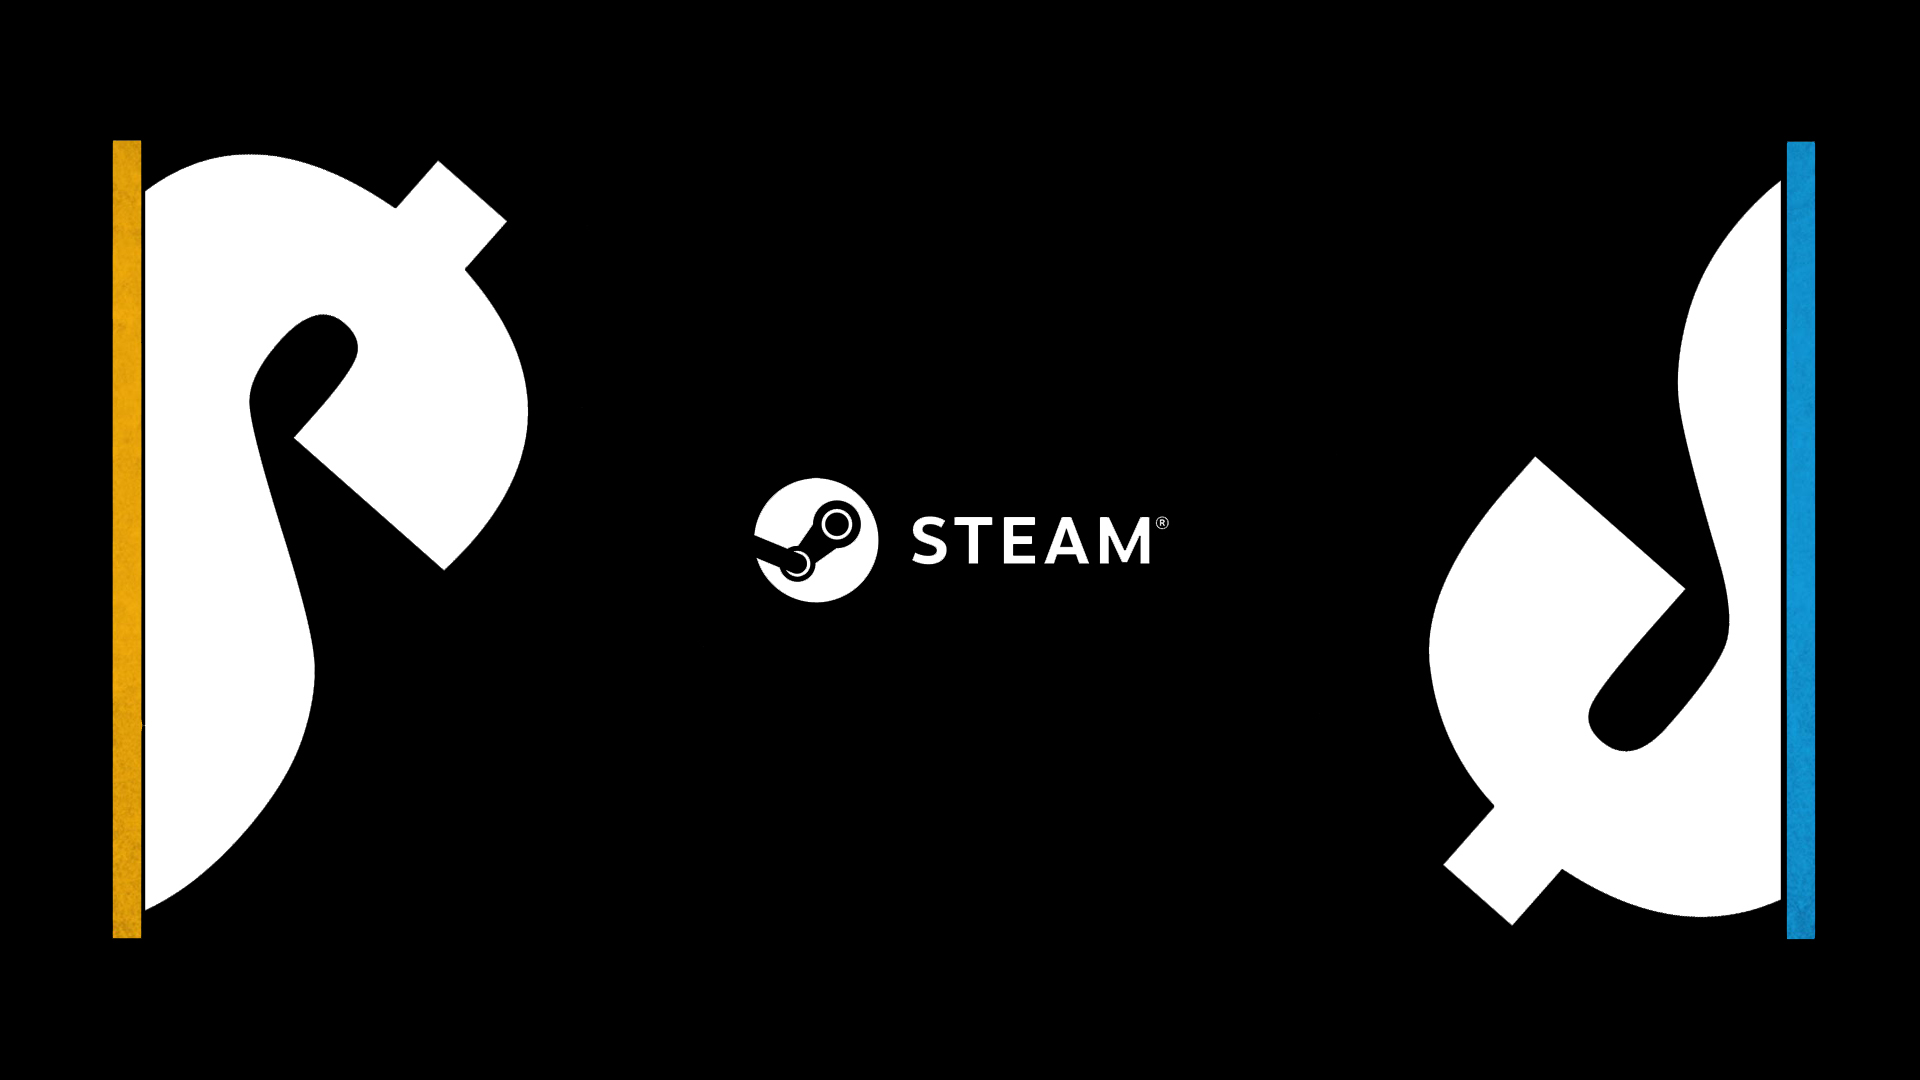 Steam Sales Portal design